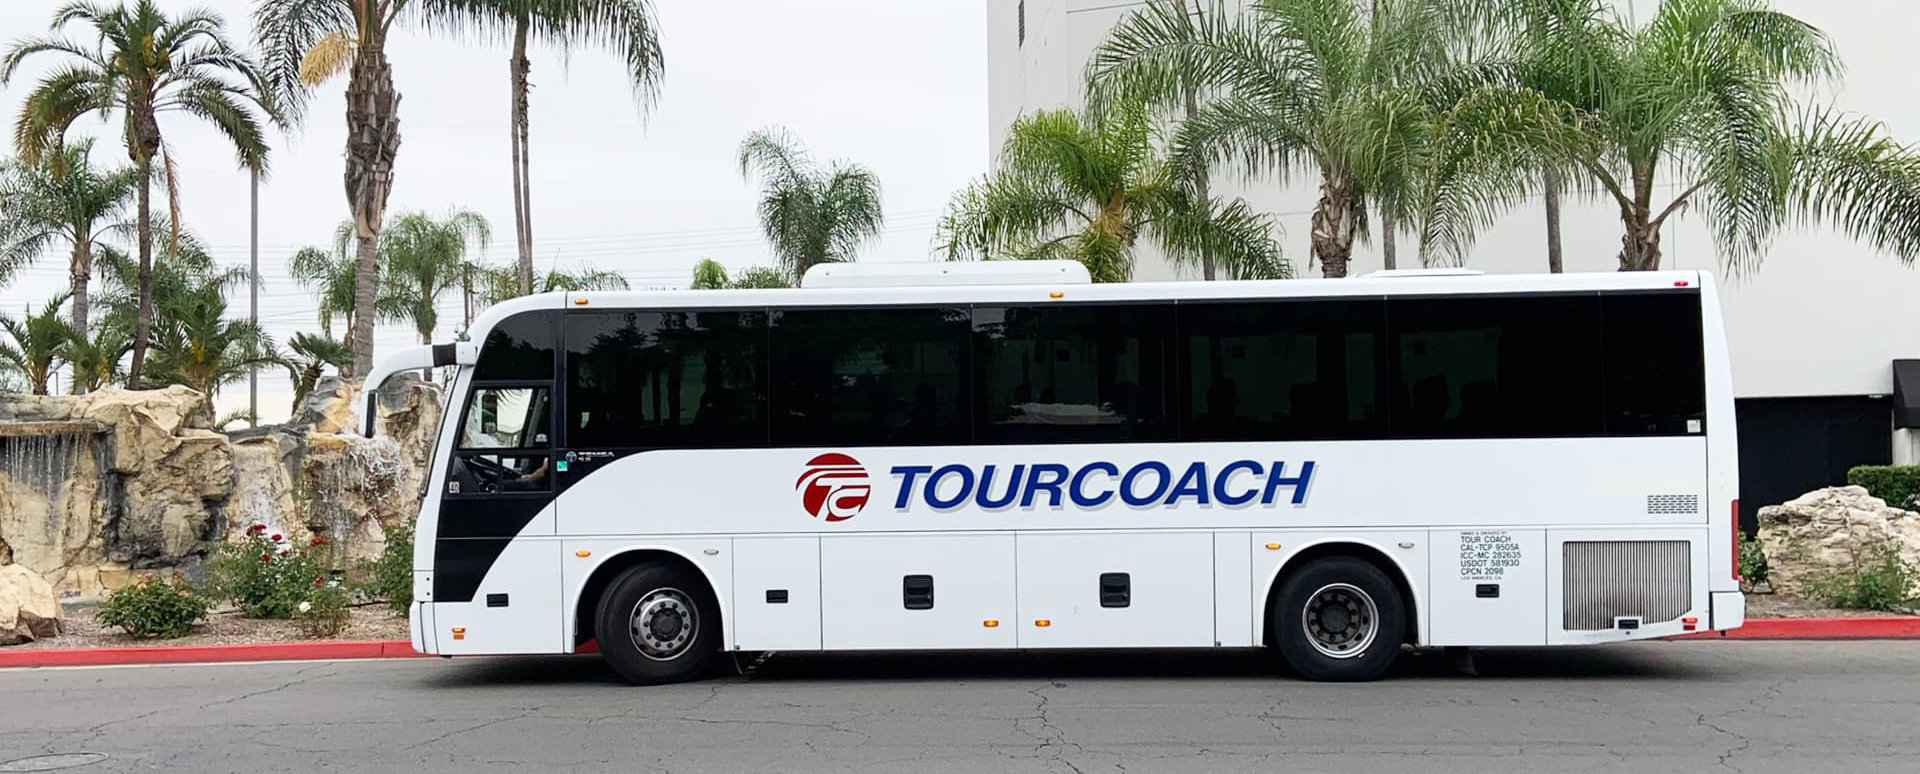 tour coach tourist bus